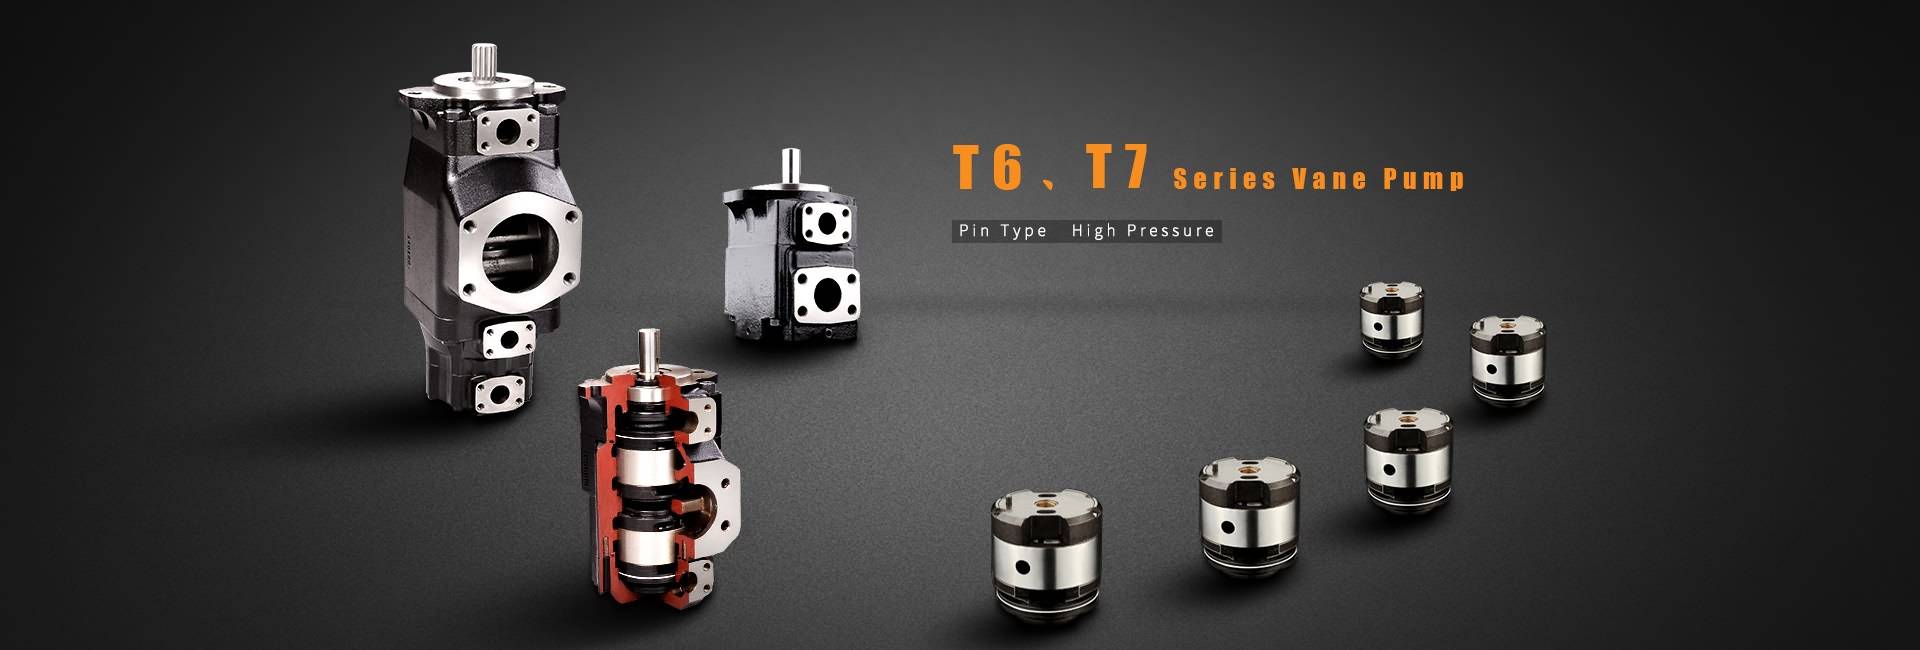 T6,T7 Series Vane Pump